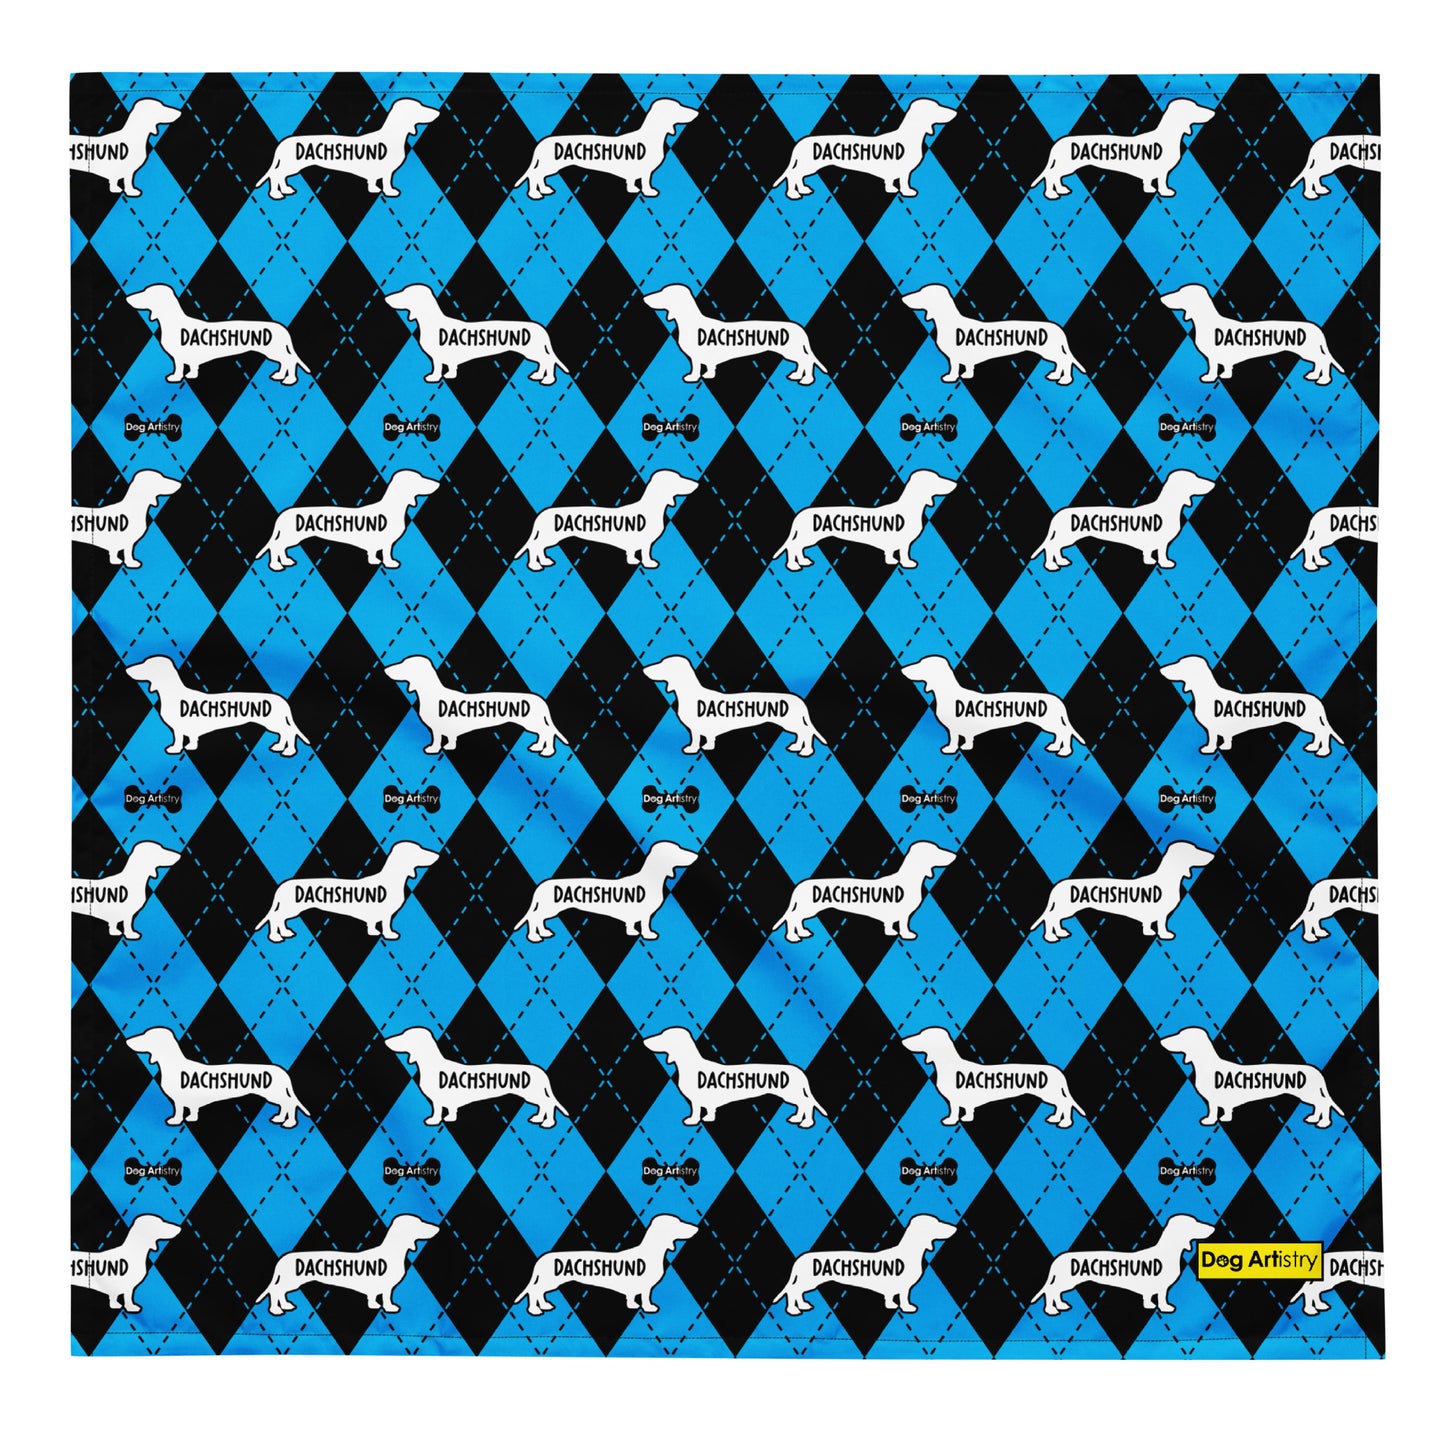 Dachshund Argyle Blue and Black All-over print bandana